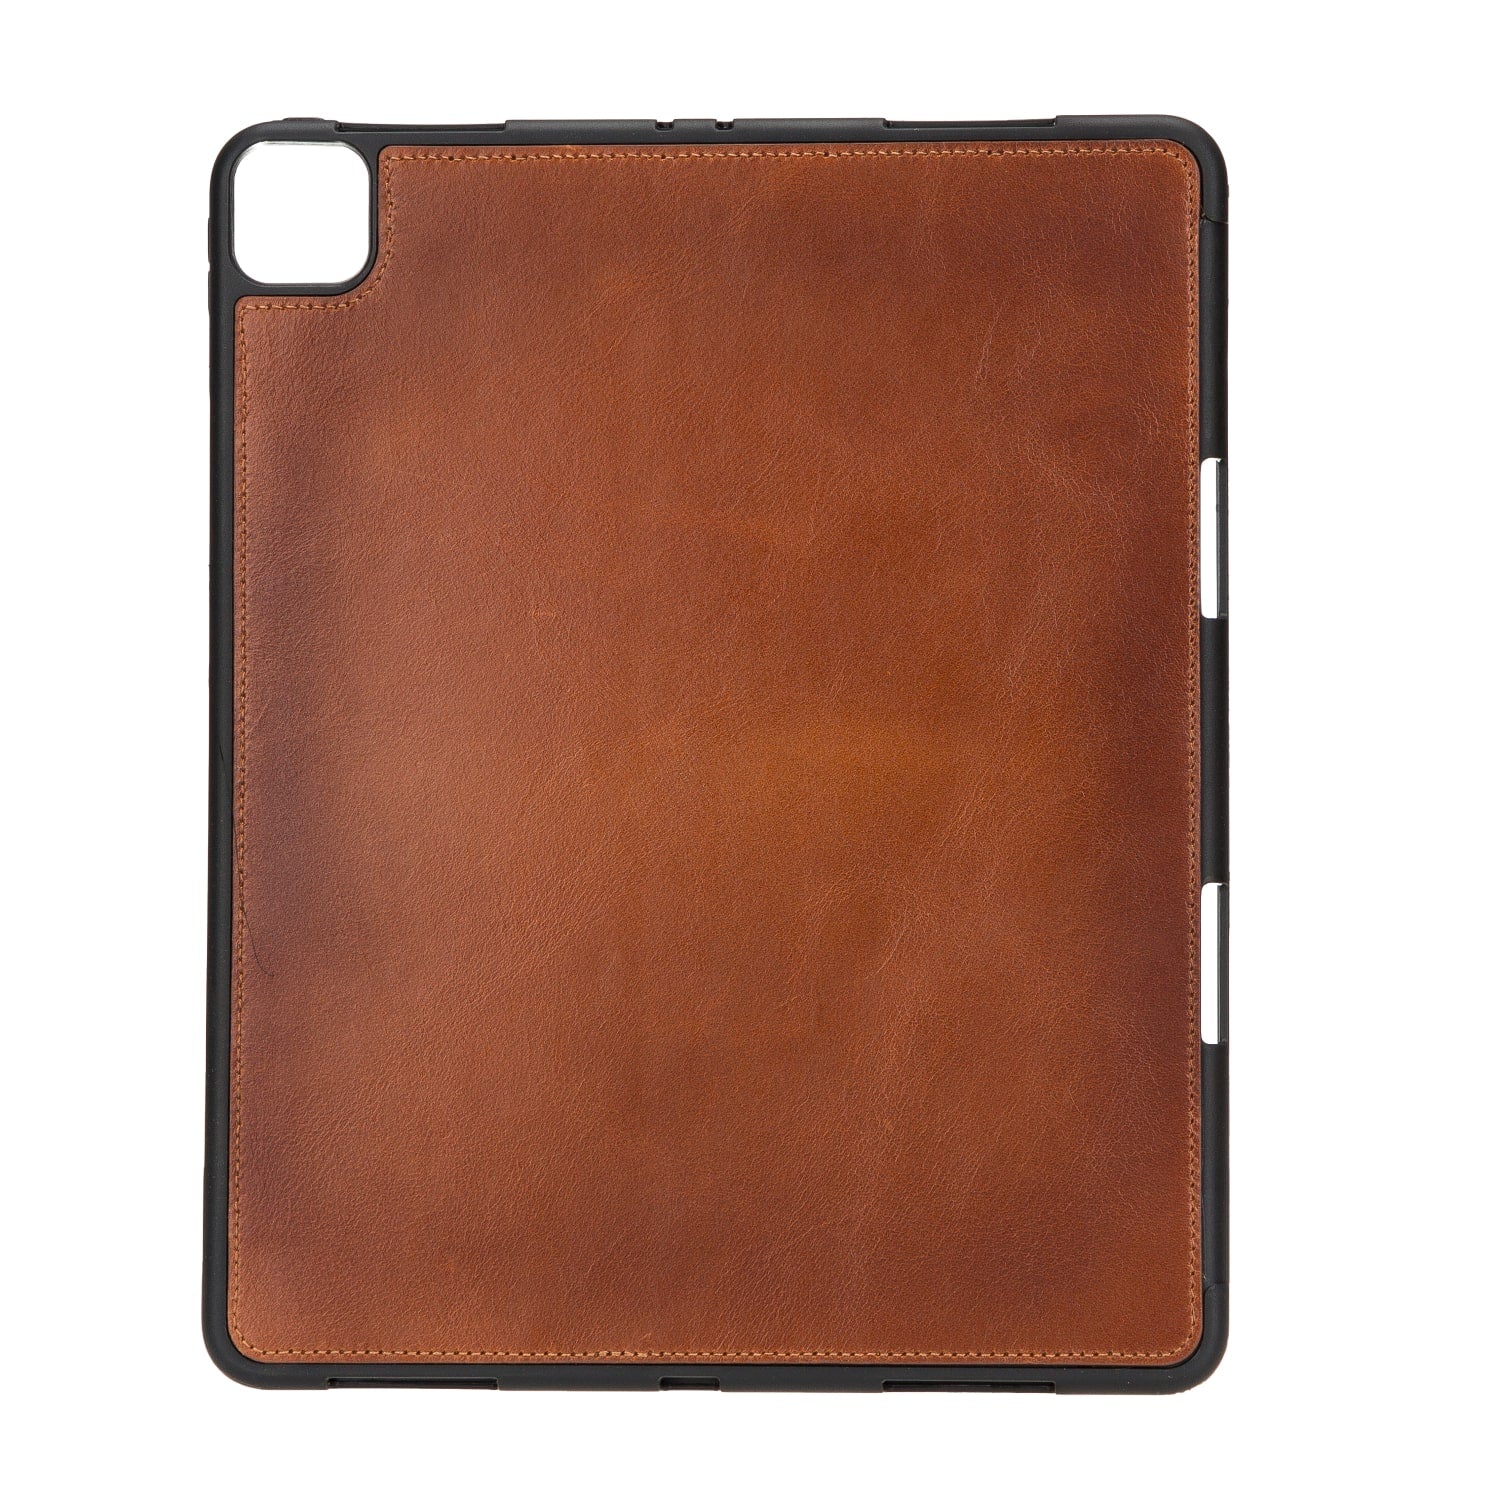 Brown Leather iPad Pro 12.9 Inc Smart Folio Case with Apple Pen Holder - Bomonti - 5